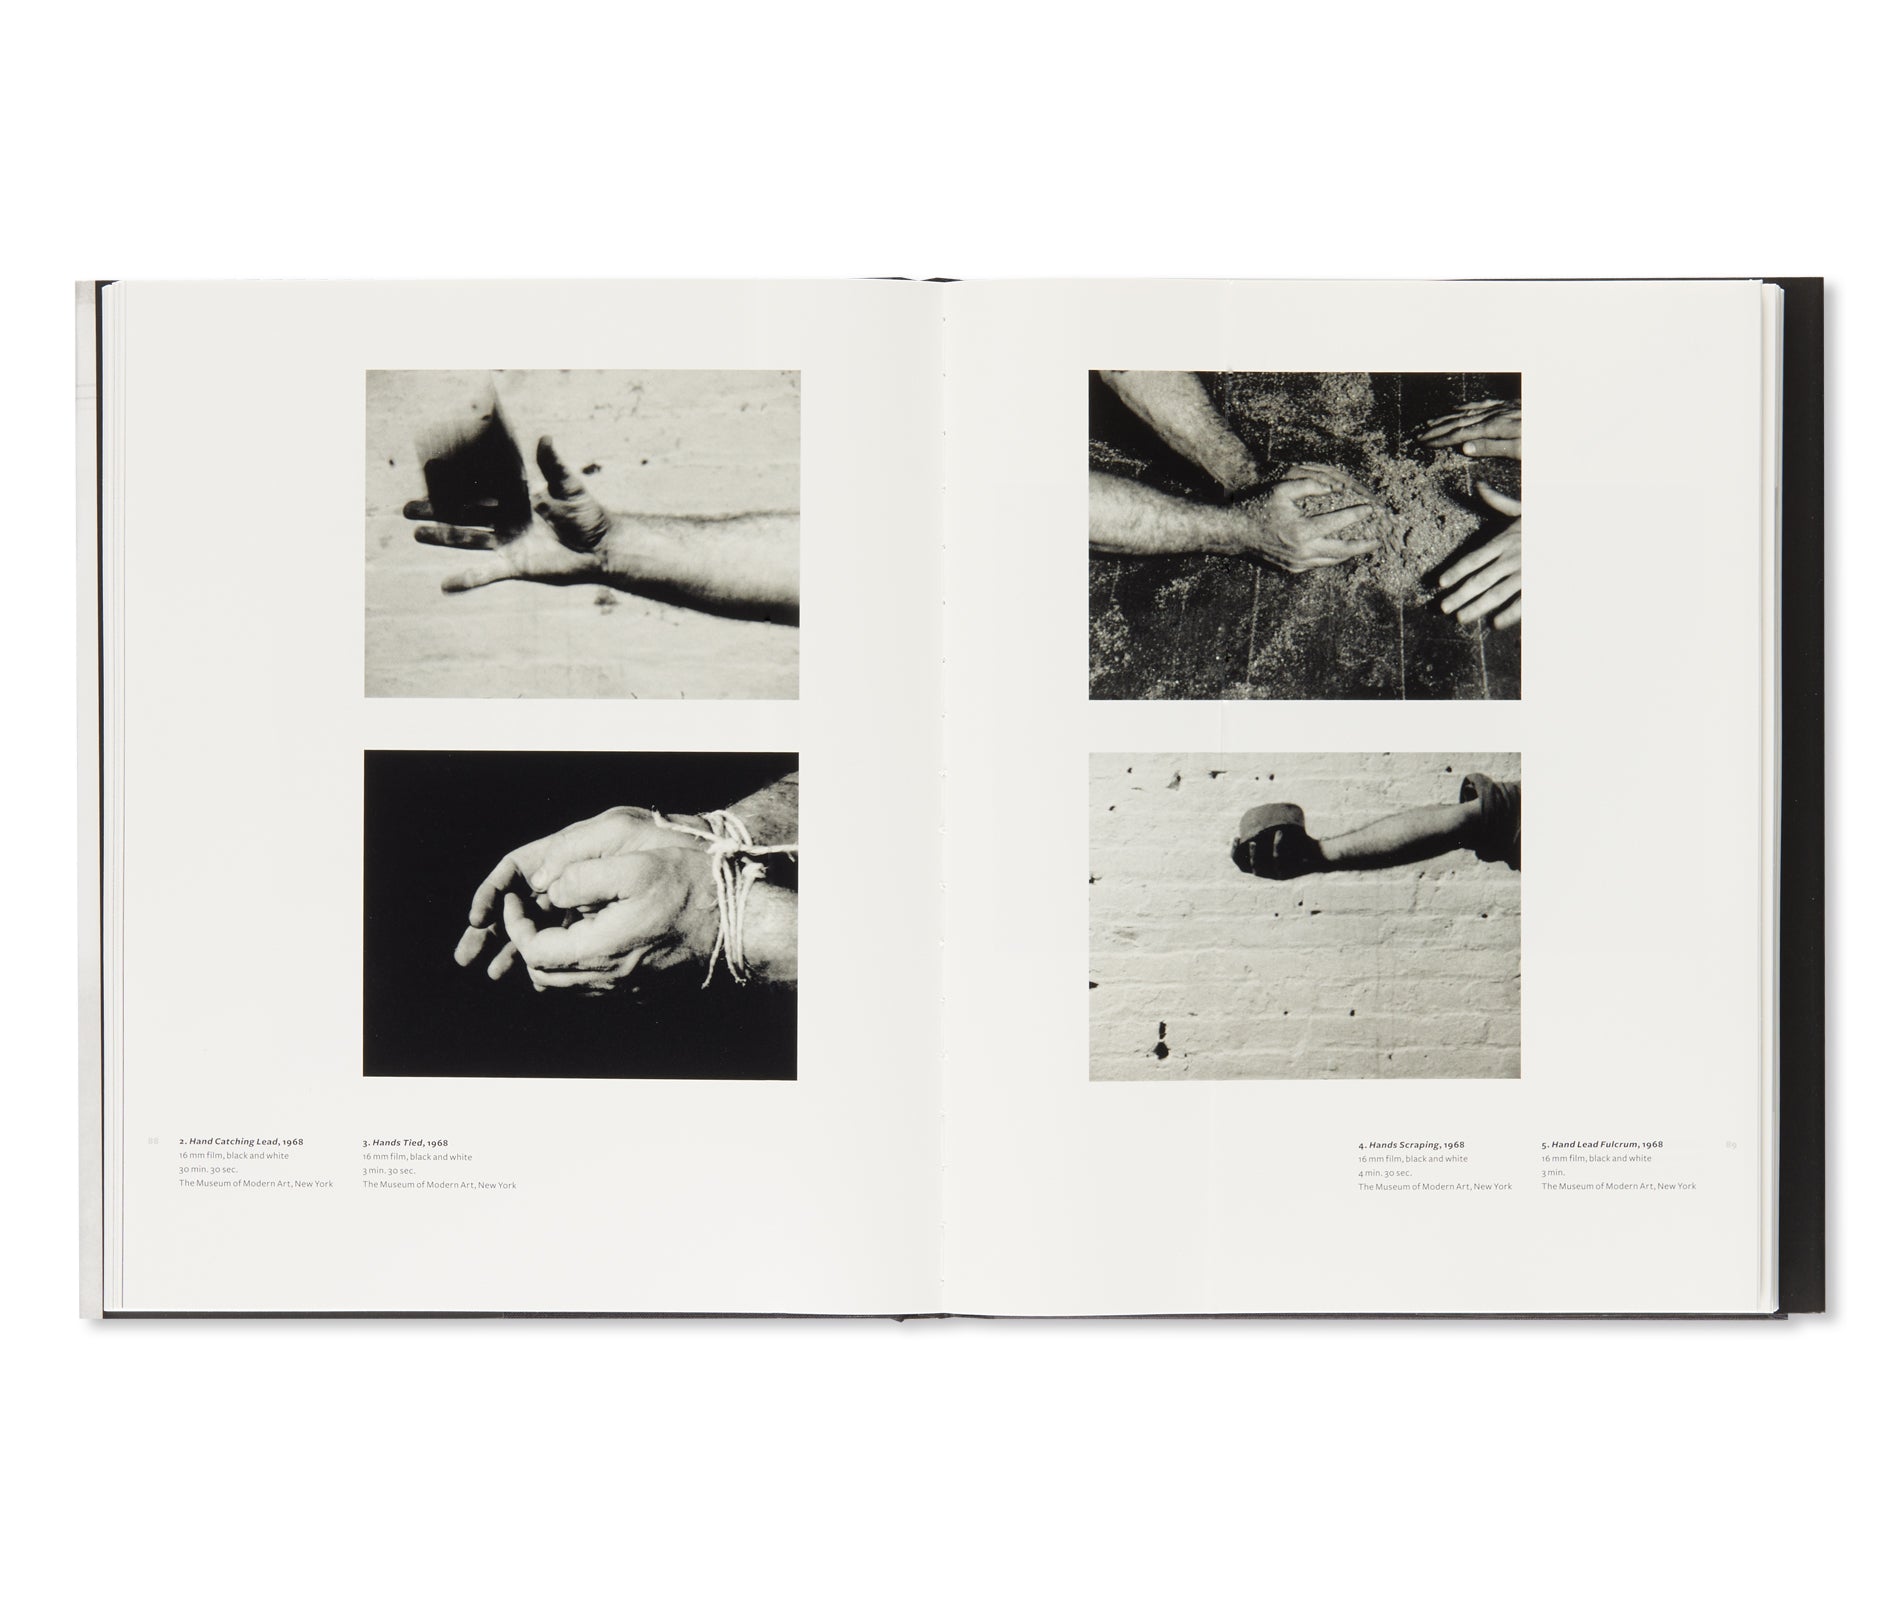 RICHARD SERRA DRAWING: A RETROSPECTIVE by Richard Serra